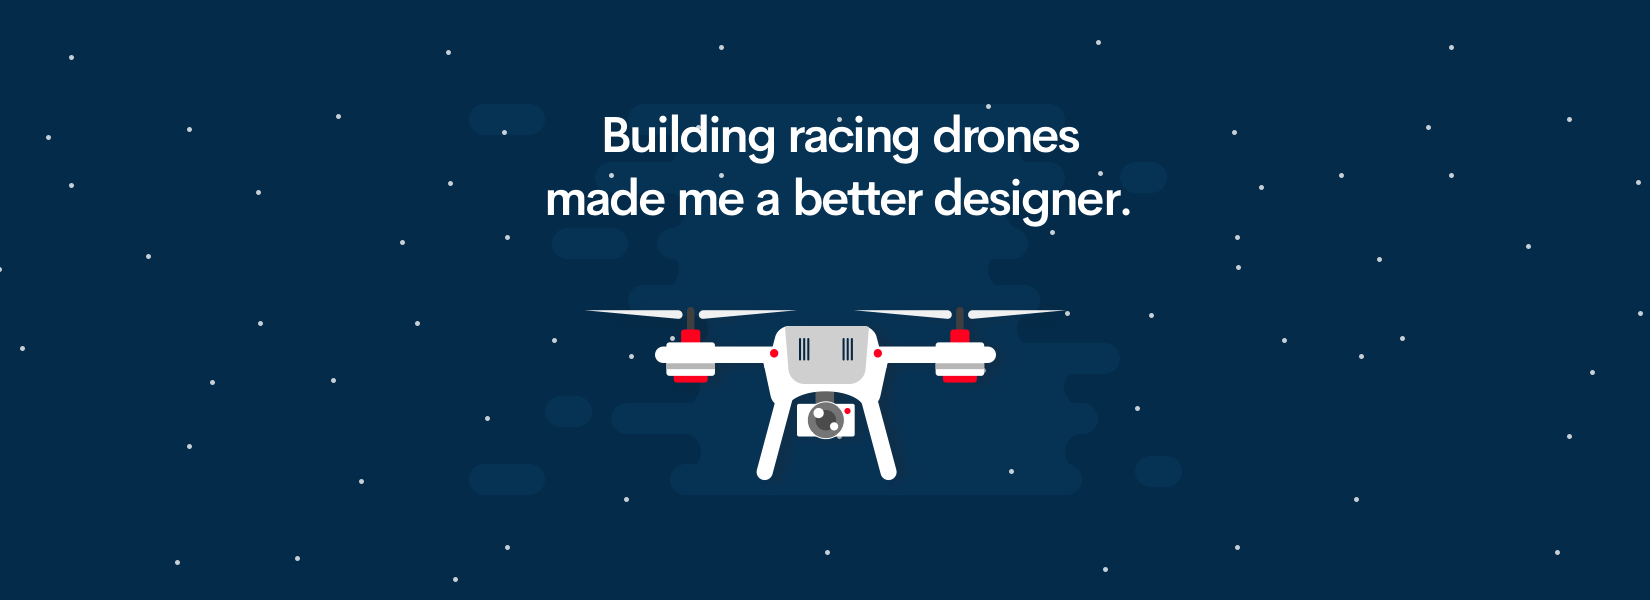 Are you a Designer? How building racing drones made me a better designer.